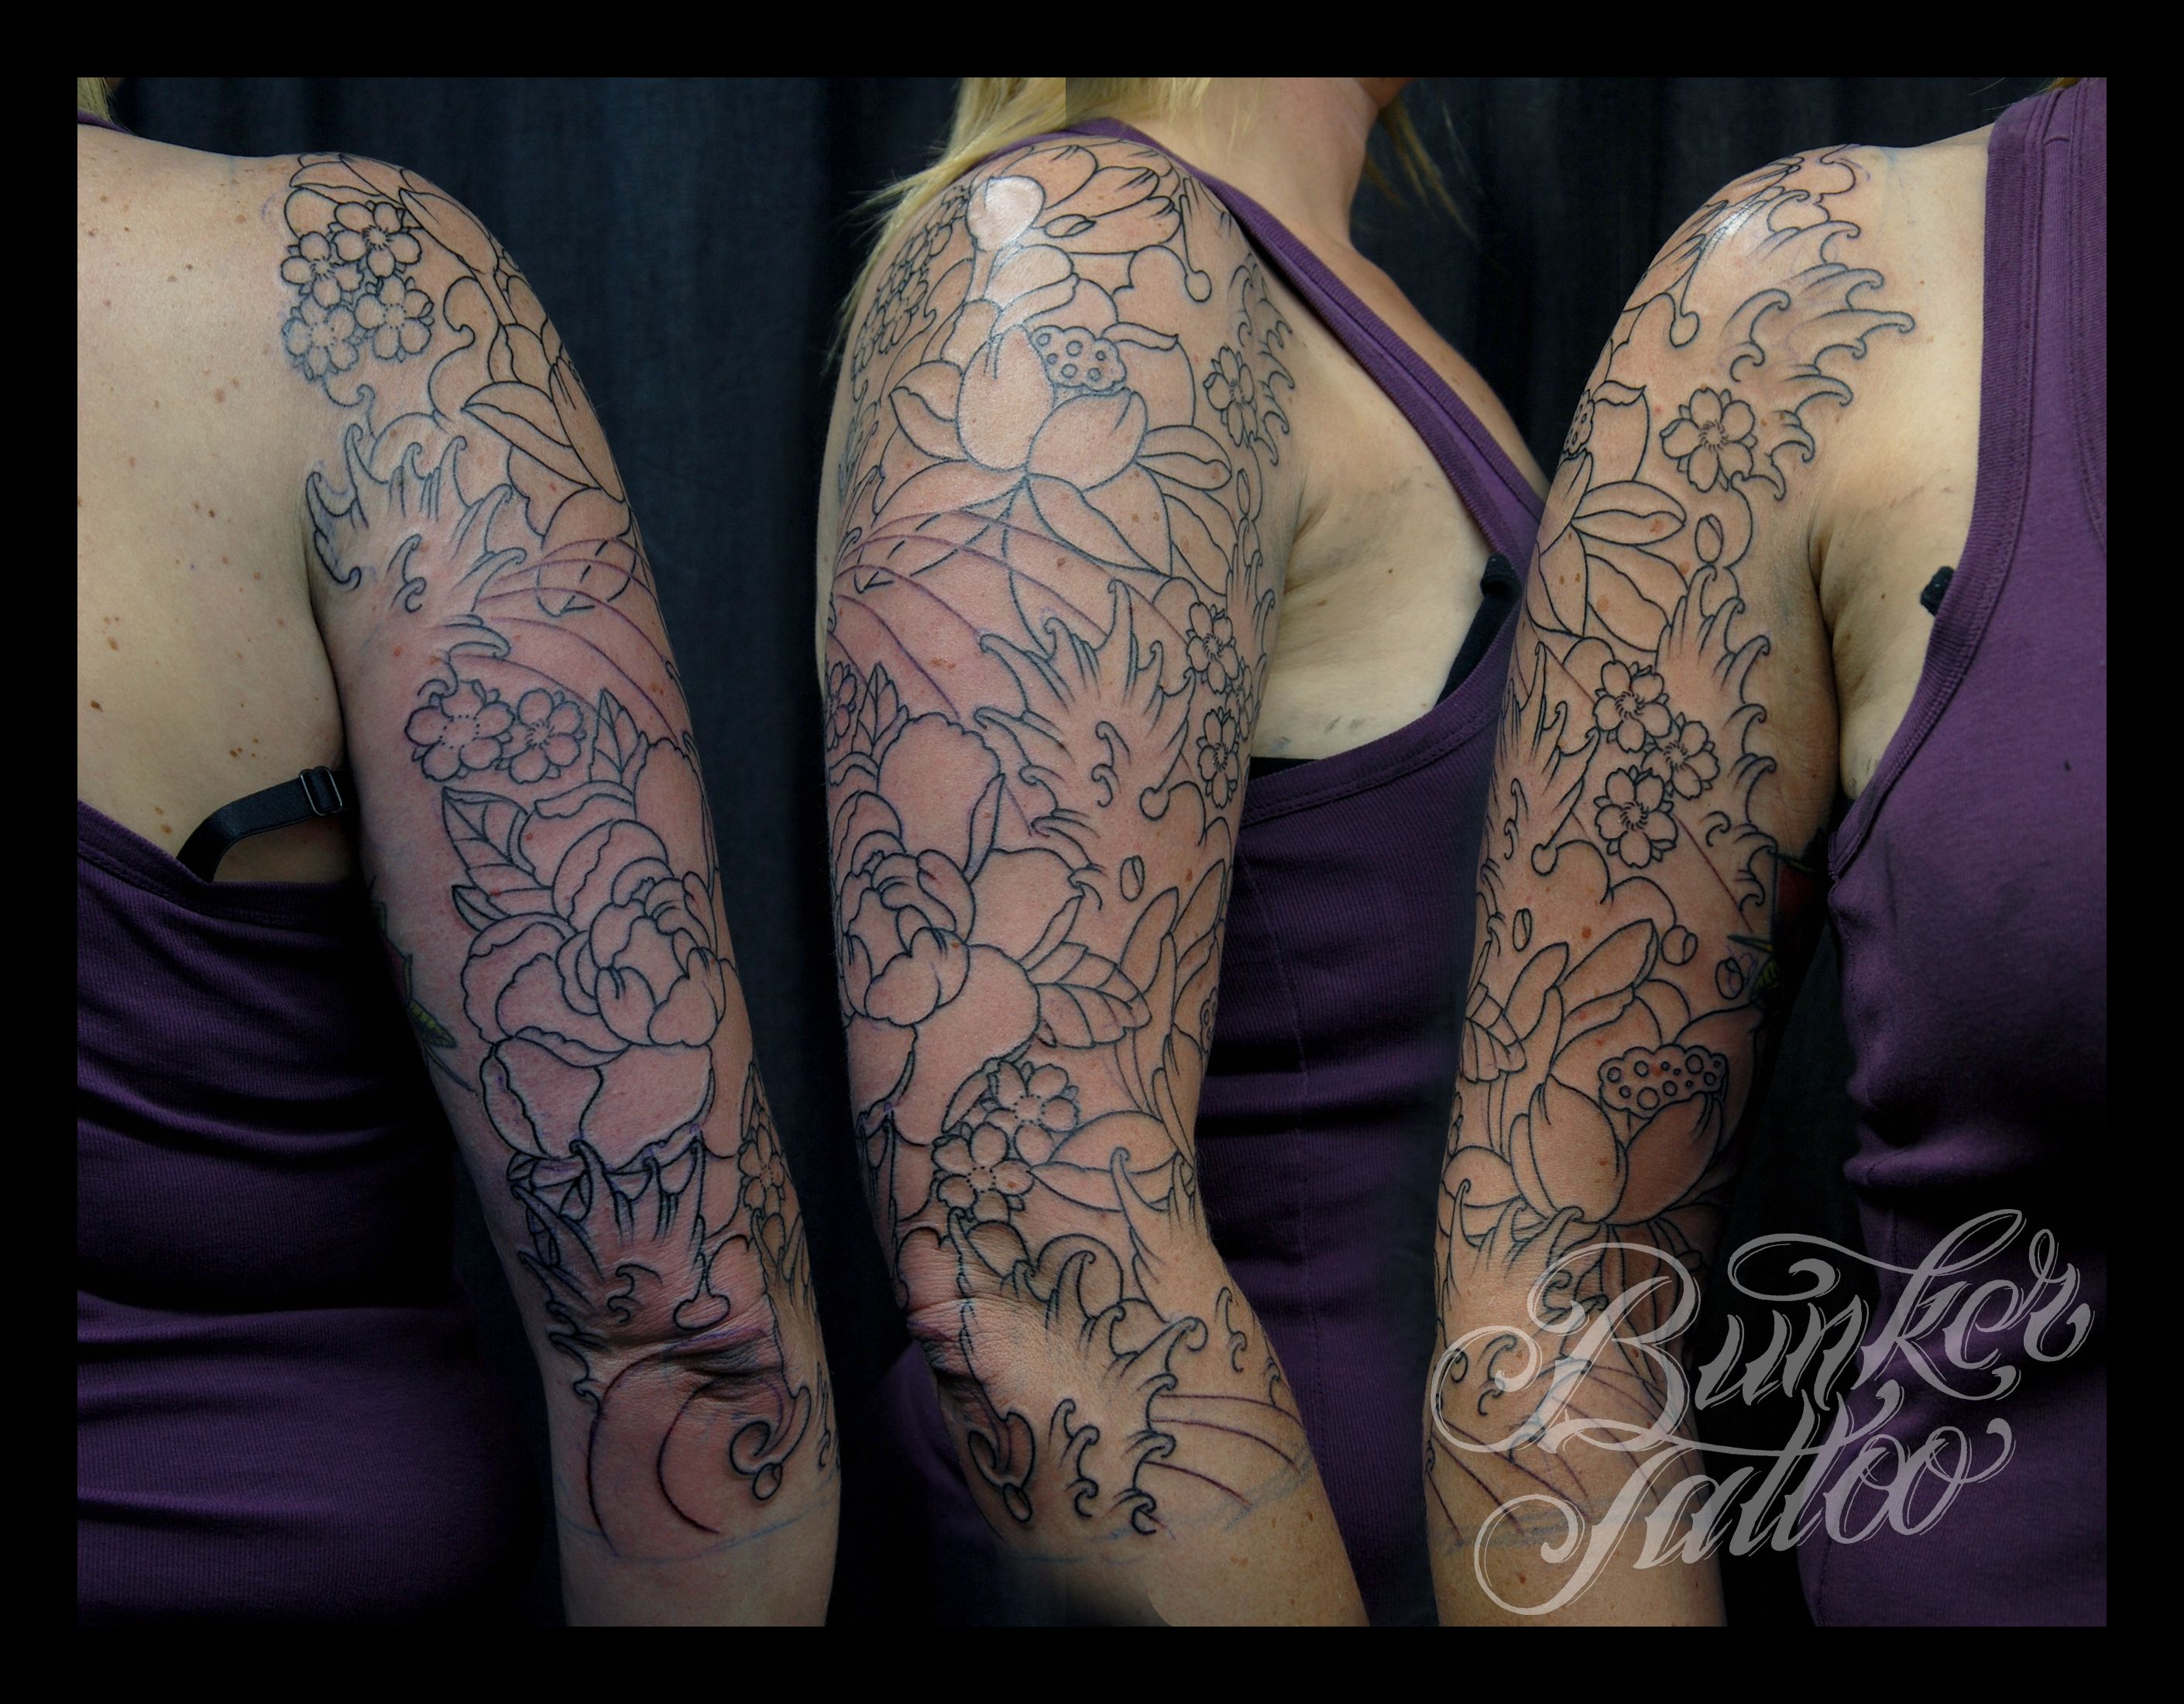 Tattoo Sleeve Ideas  Chronic Ink